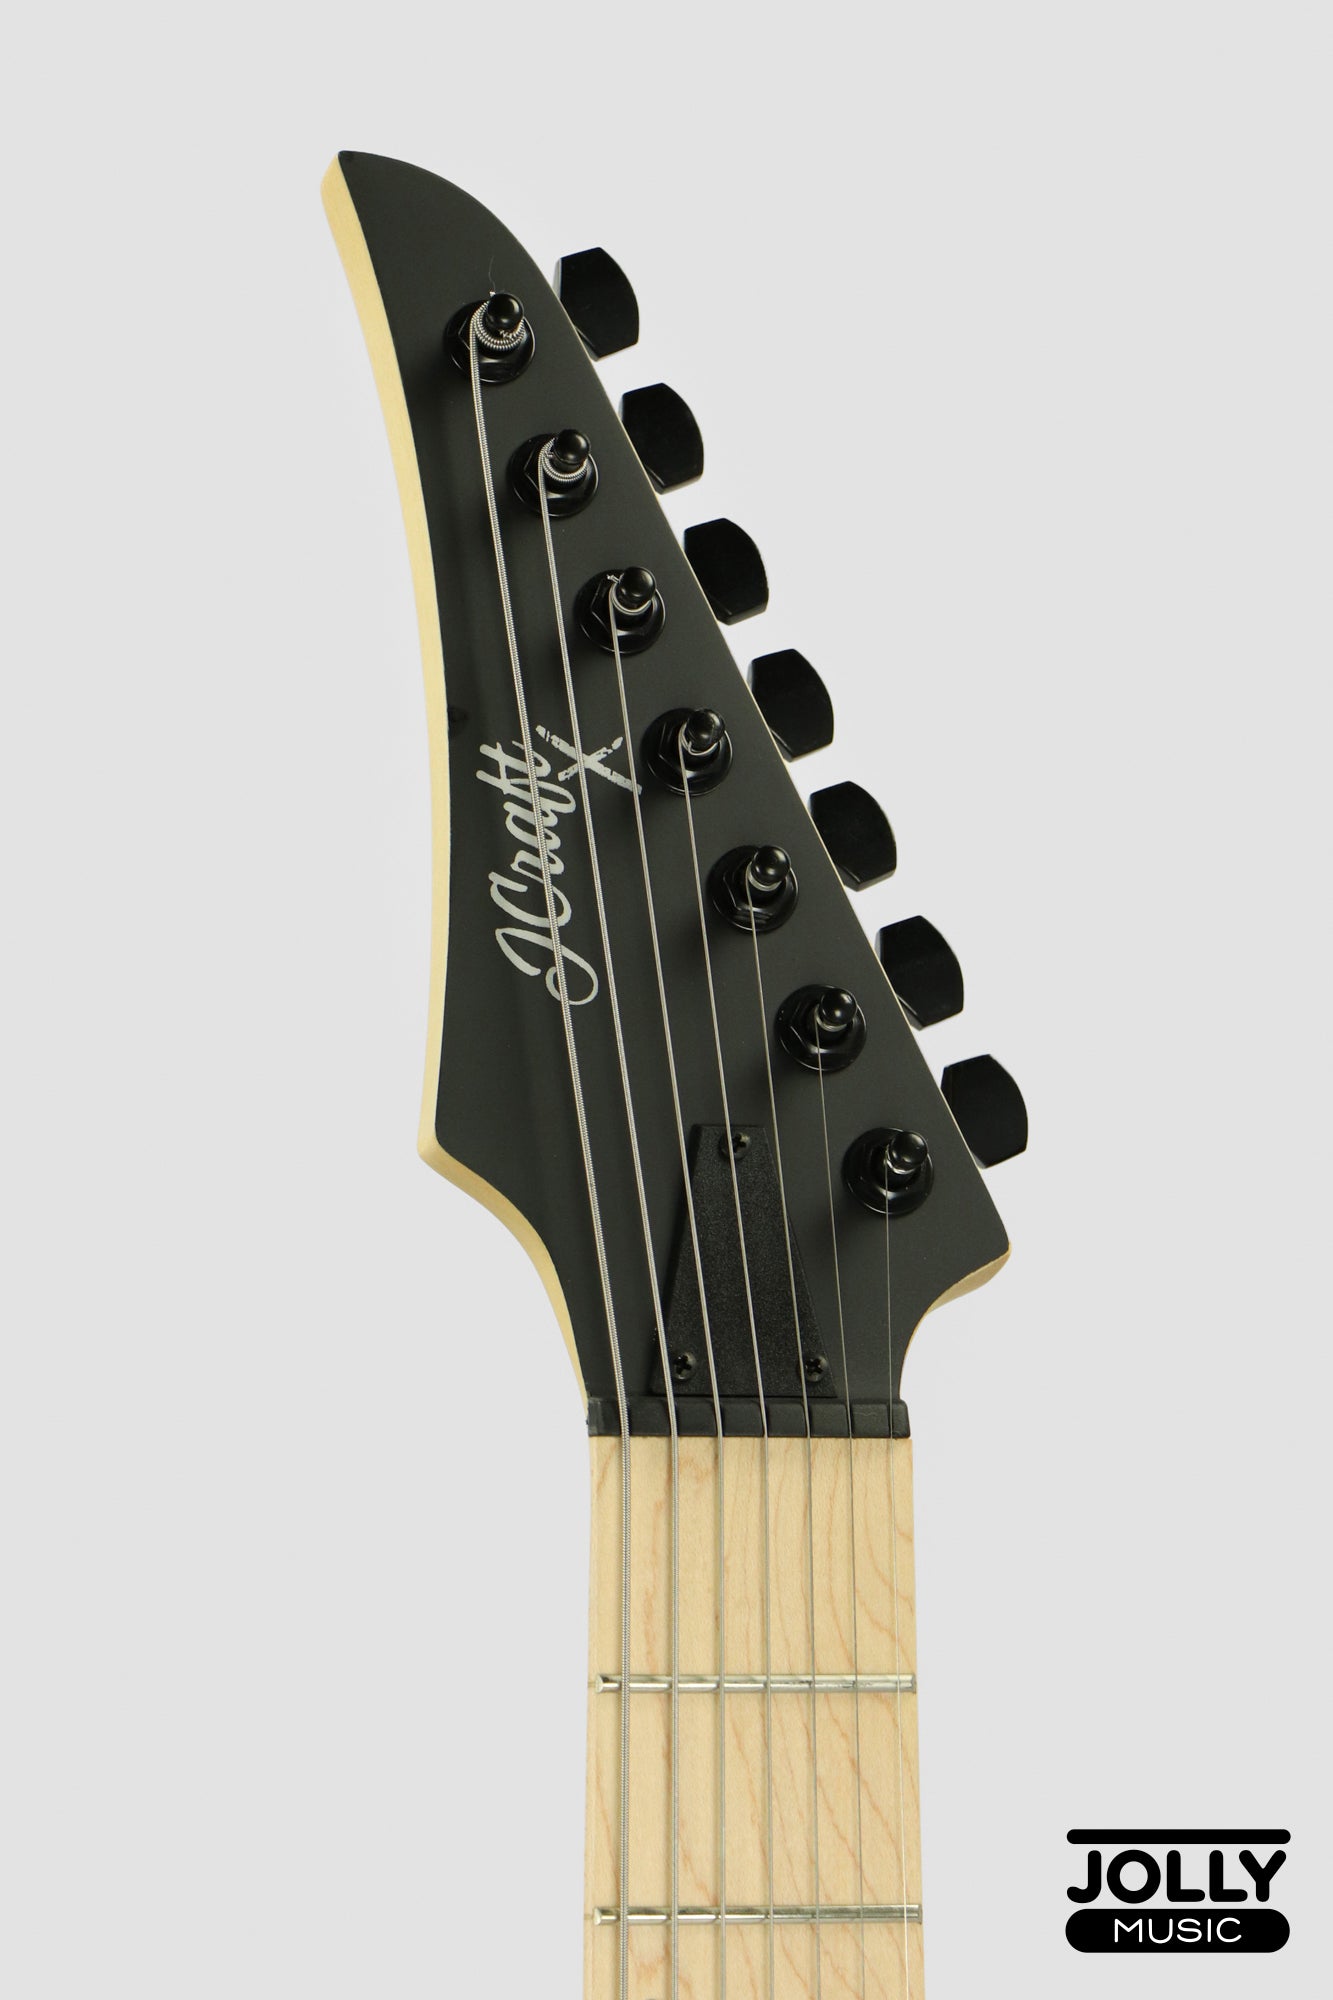 JCraft X Series Bushido BX7-1T 7-String Super S-Style Electric Guitar - Satin Sandstorm